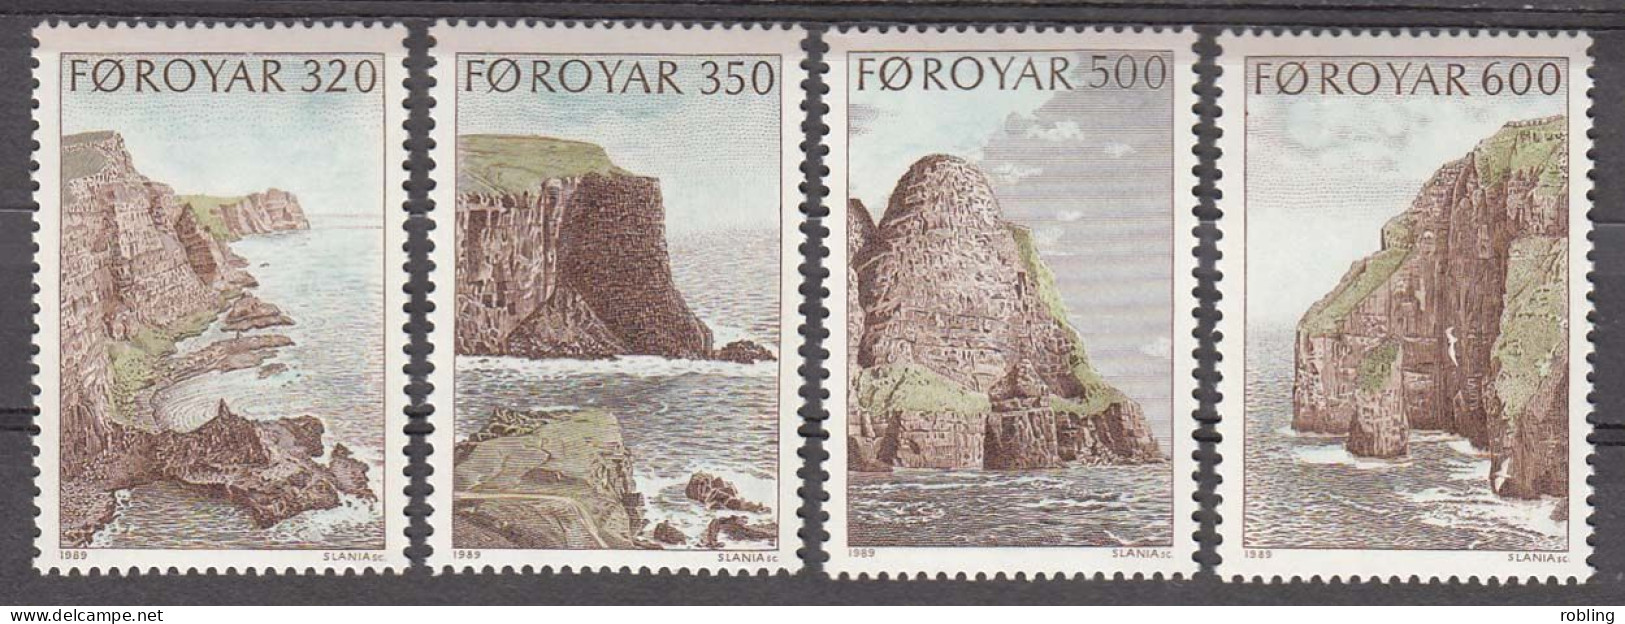 Faroe Islands 1989  Mountains Michel 190-93  MNH 30997 - Berge